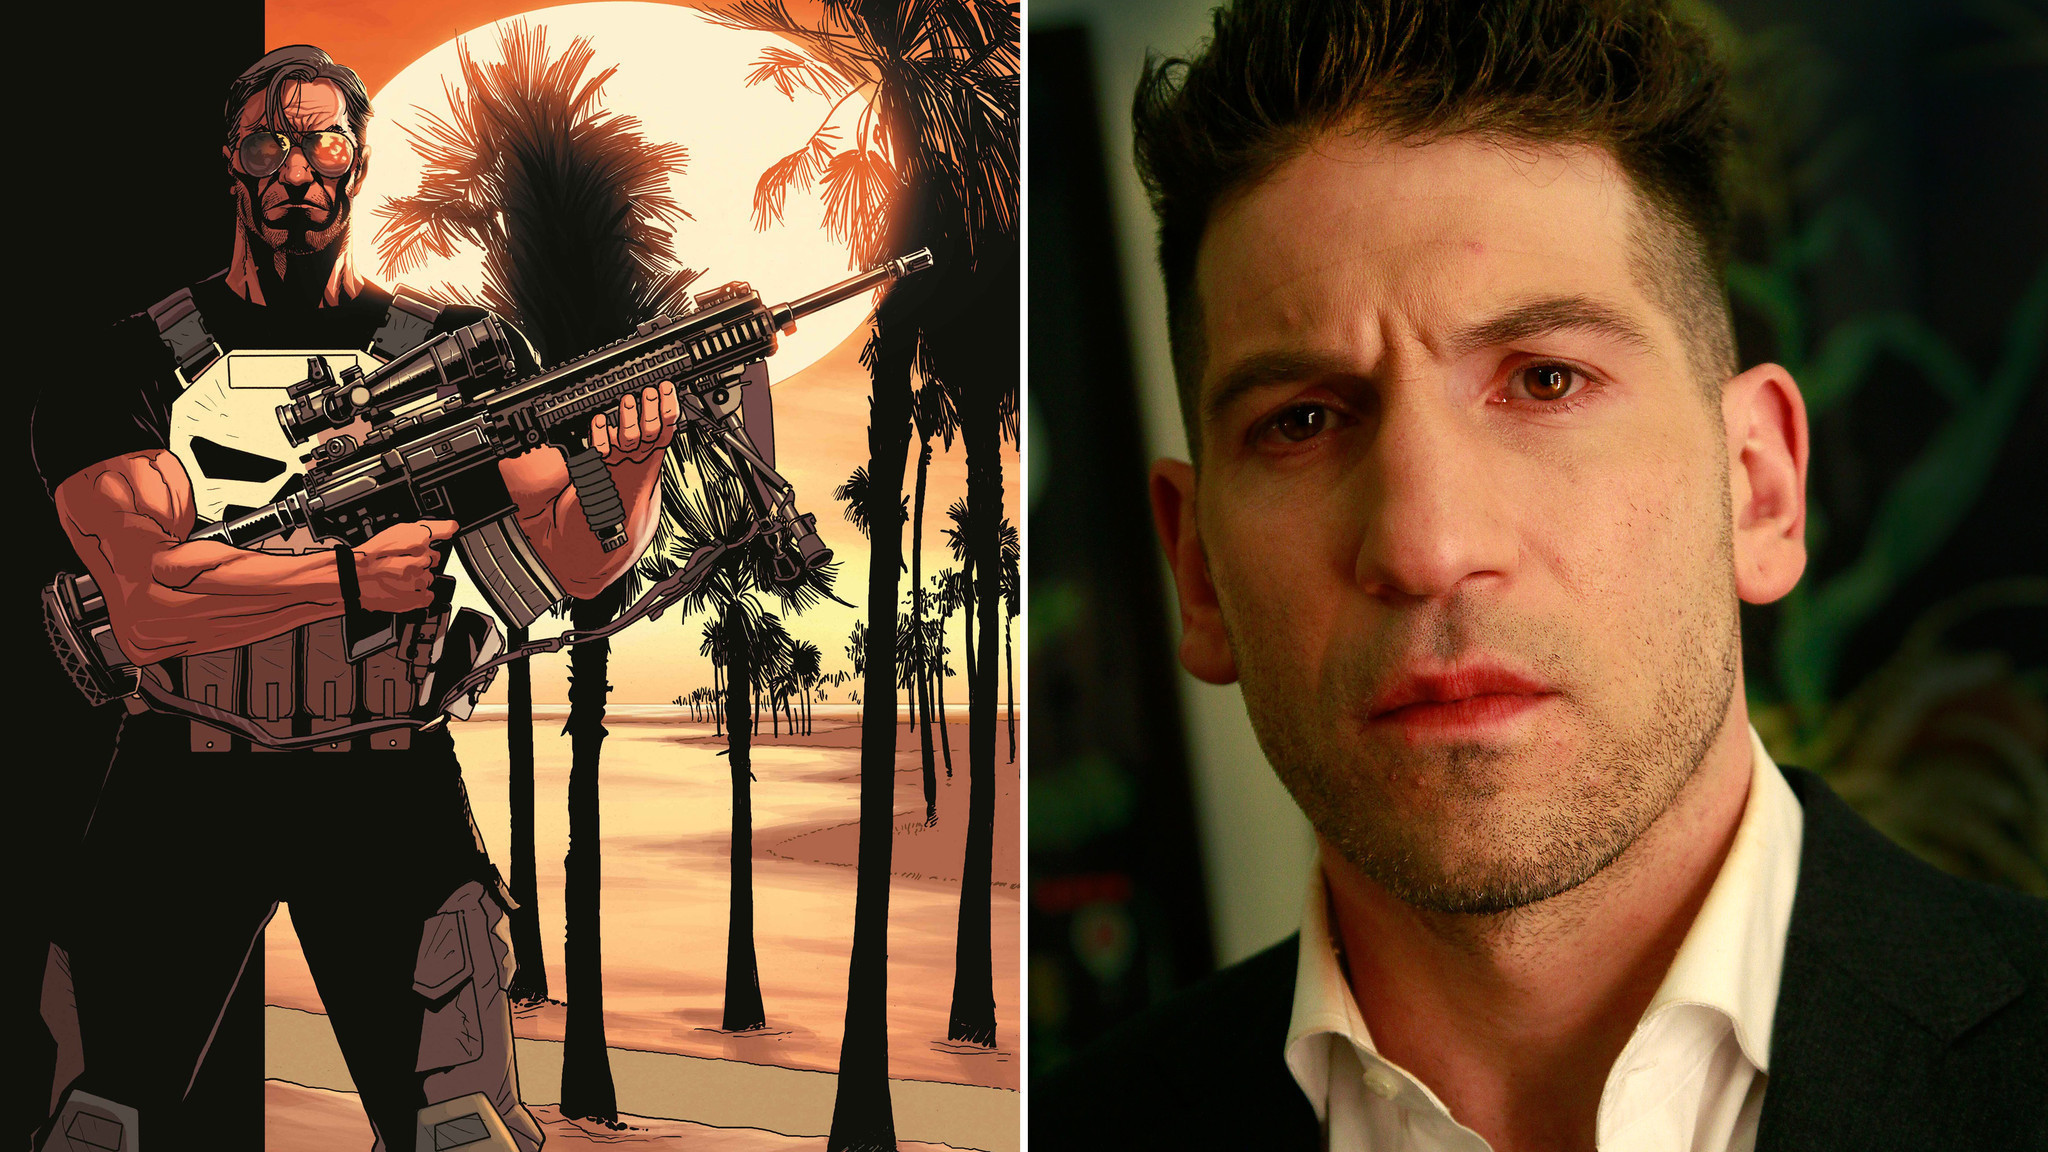 'Walking Dead's' Jon Bernthal to play Punisher in 'Daredevil' series - LA Times